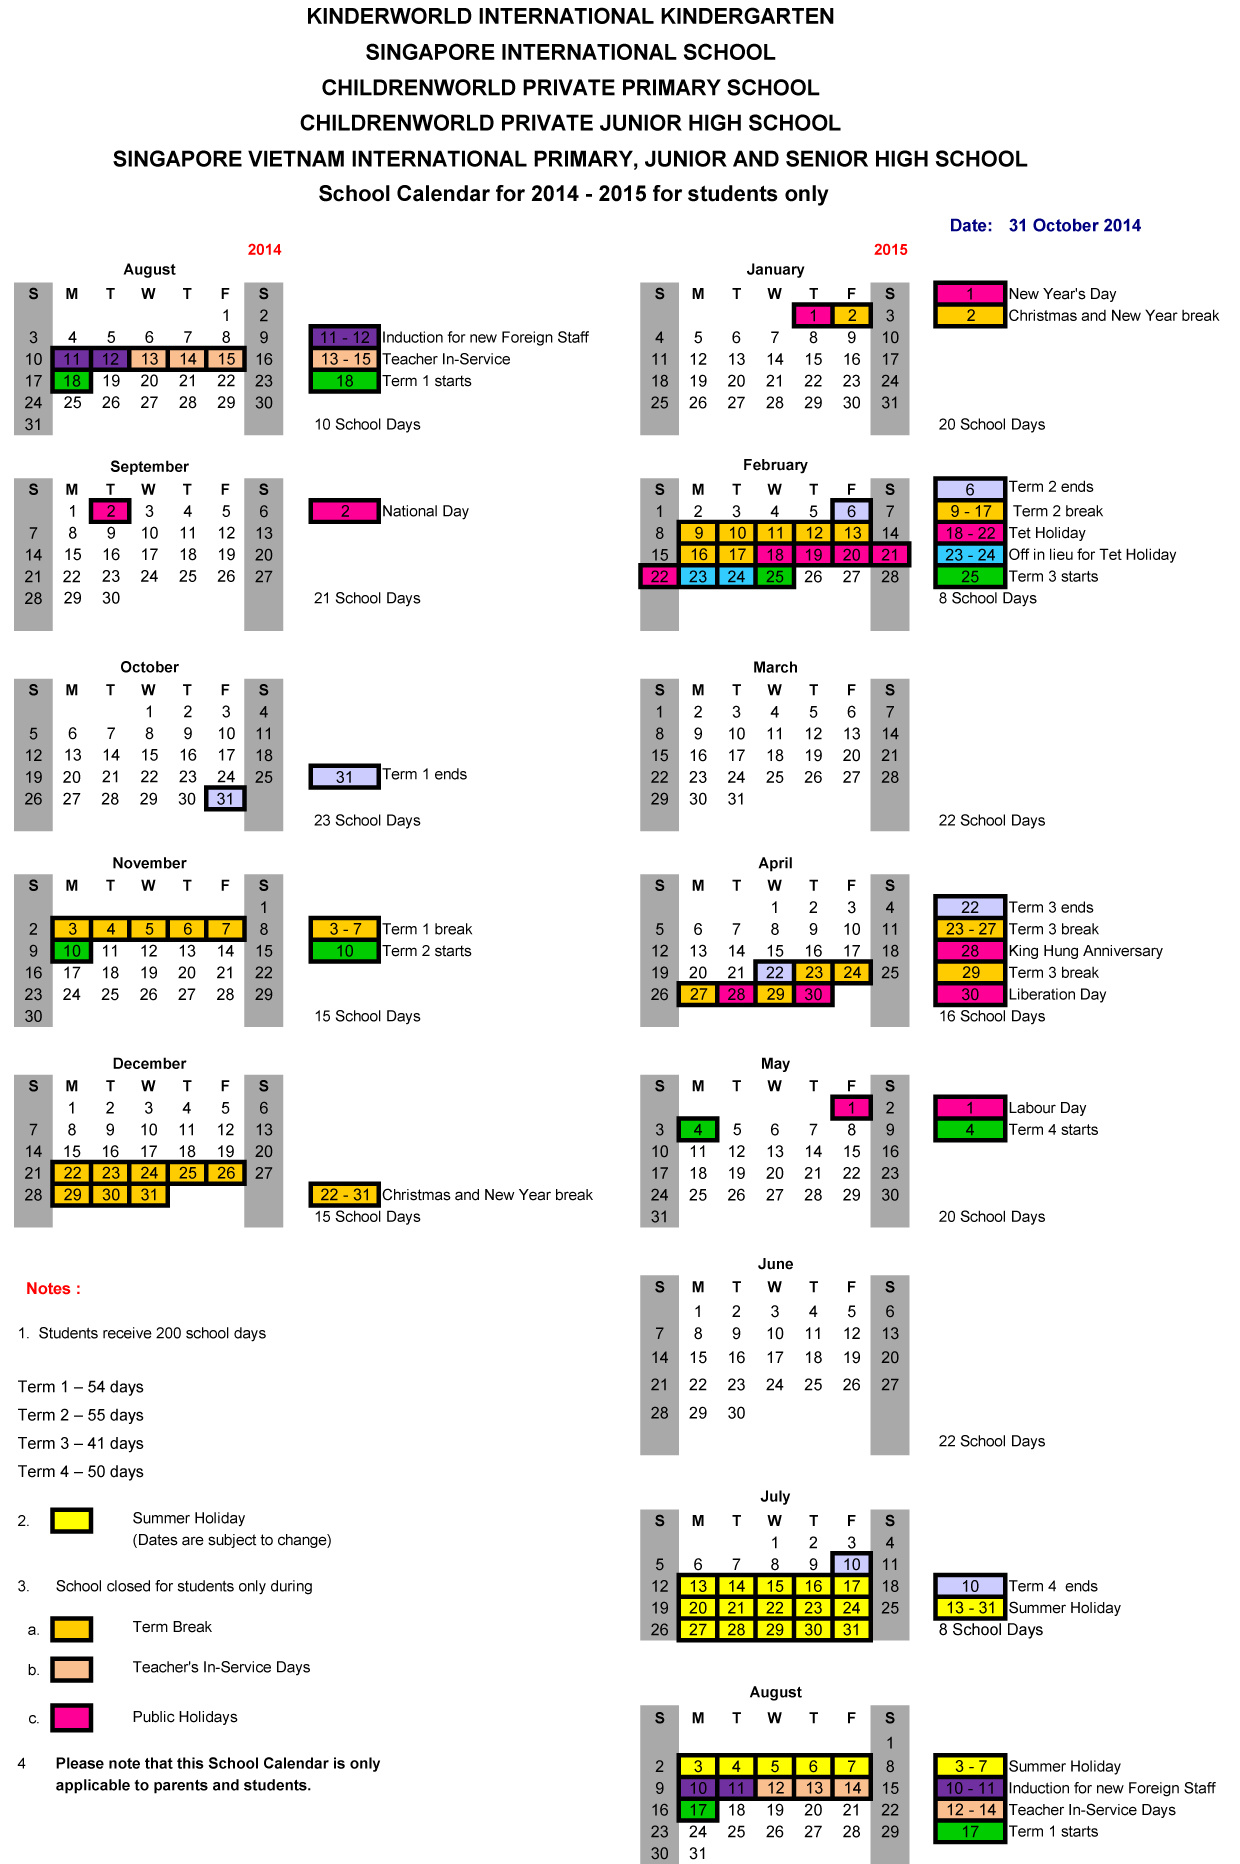 School Calendar Singapore International School Binh Duong New City